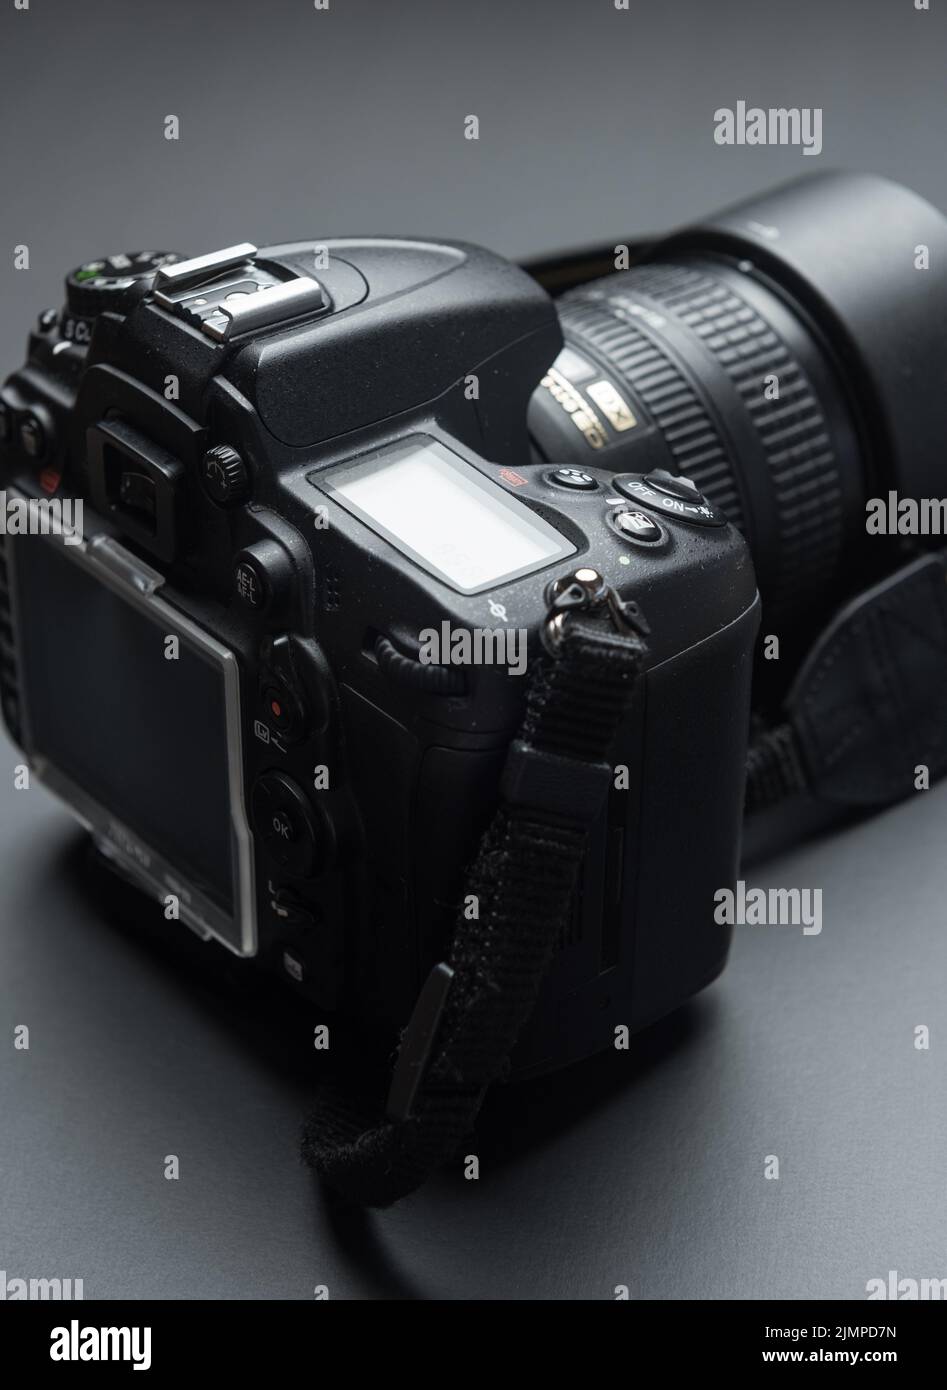 Nikon d7000 hi-res stock photography and images - Alamy